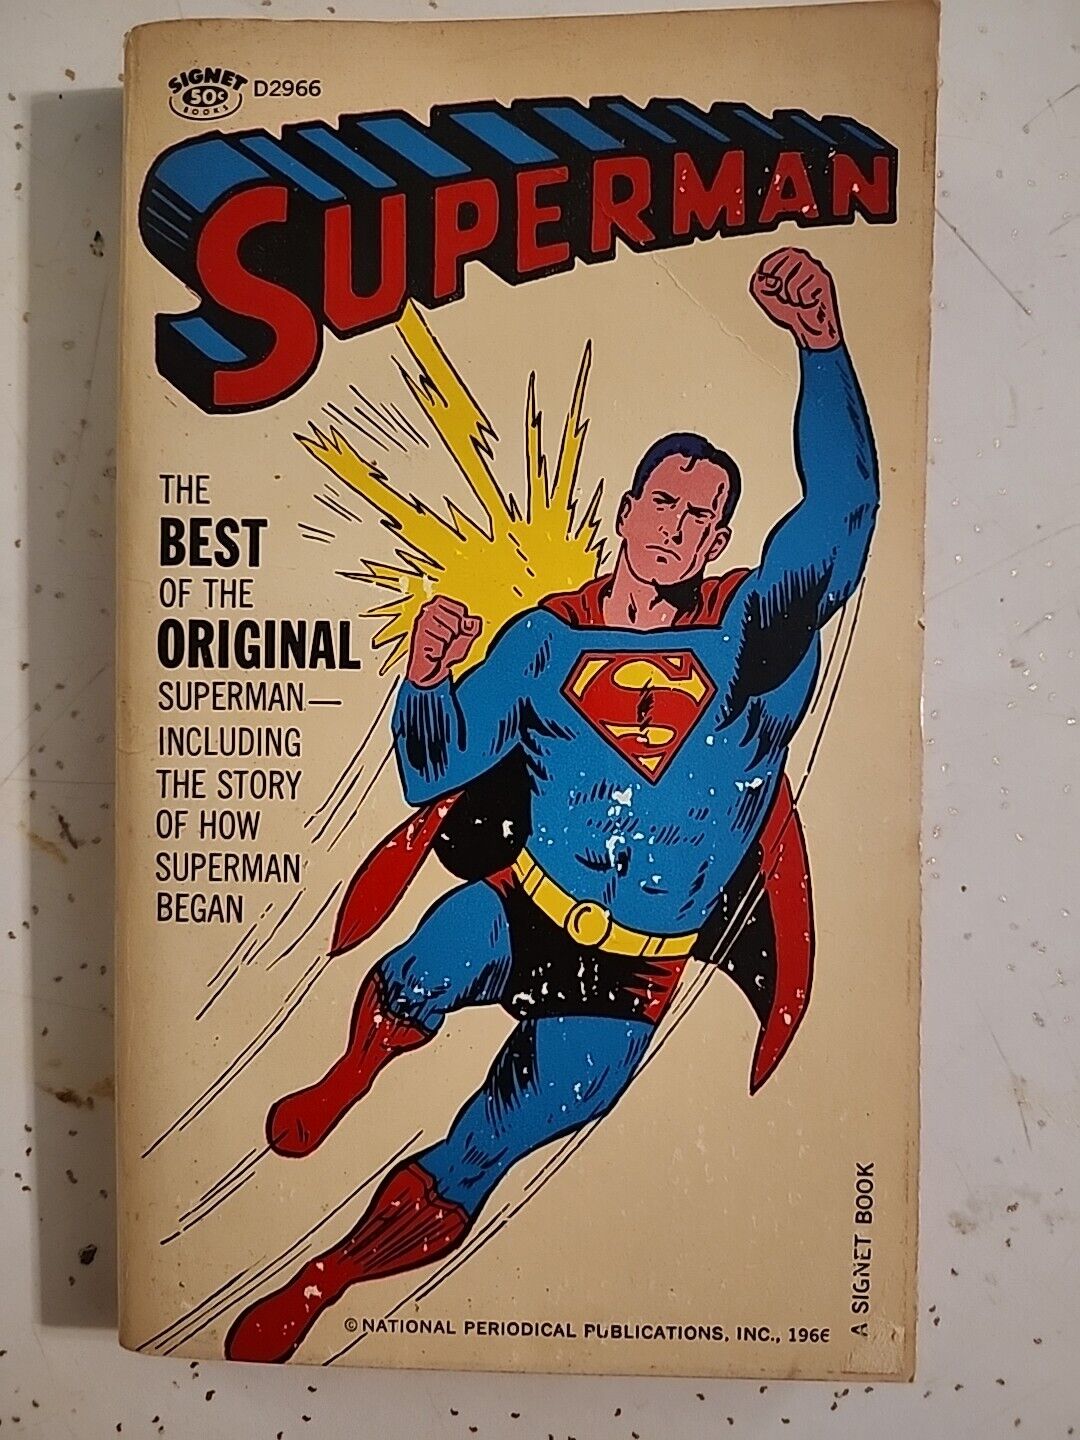 Superman 1966 Signet Paperback Comic Book D2966 1st Printing Art by Wayne Boring